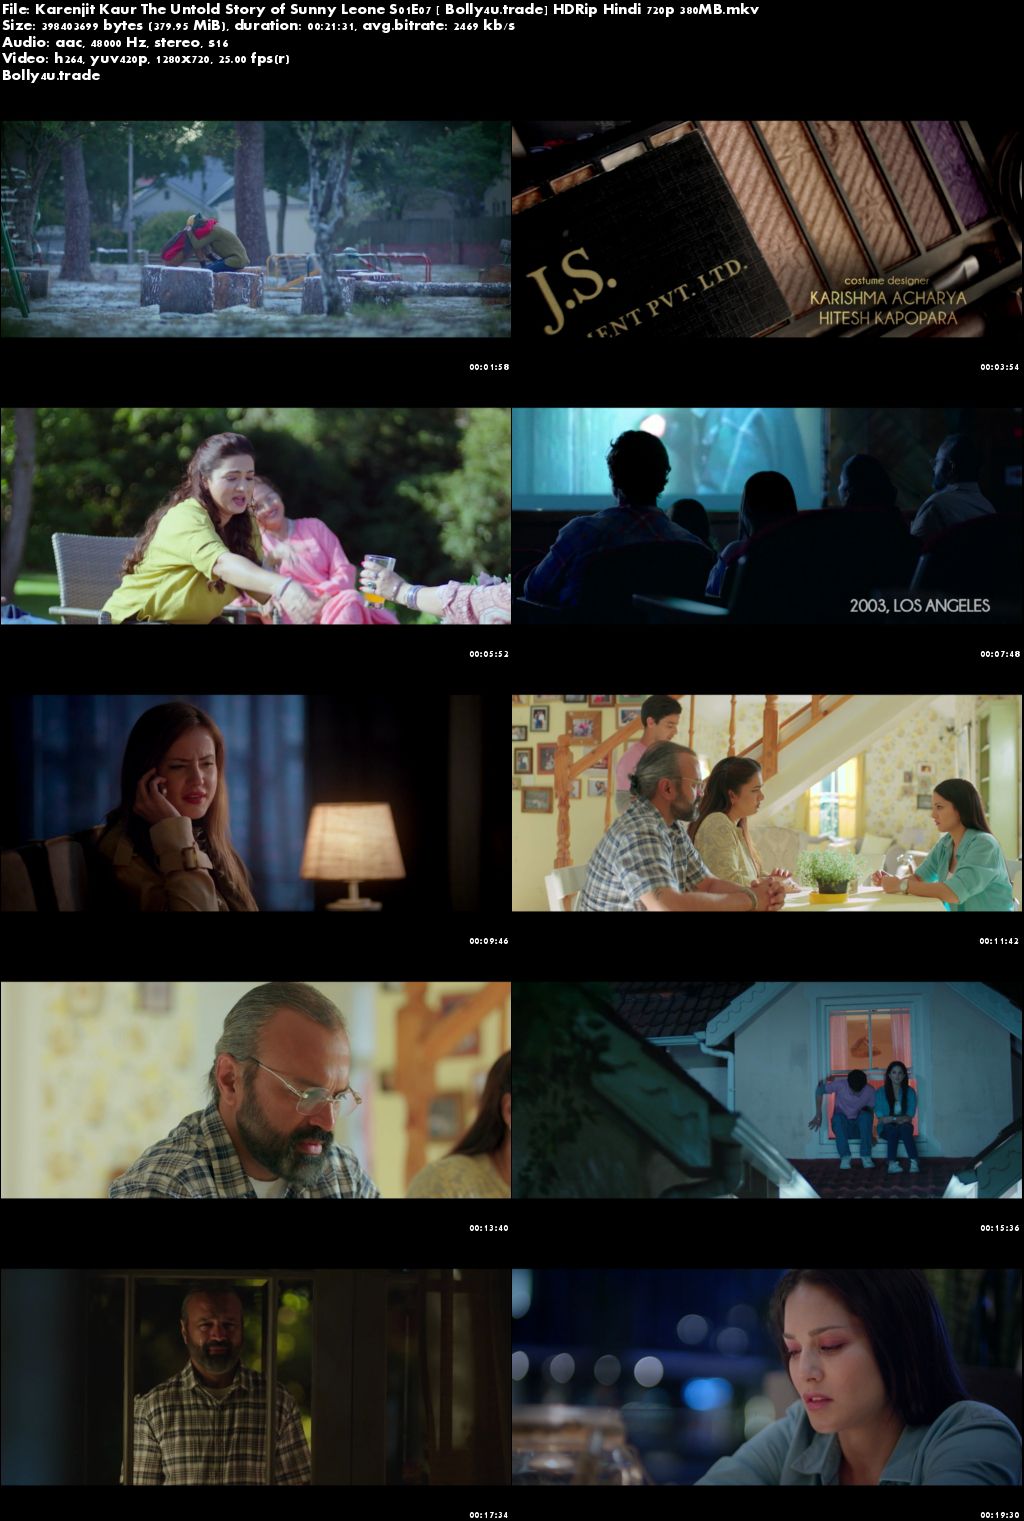 Karenjit Kaur The Untold Story of Sunny Leone S01E07 HDRip 350MB Hindi 720p Download